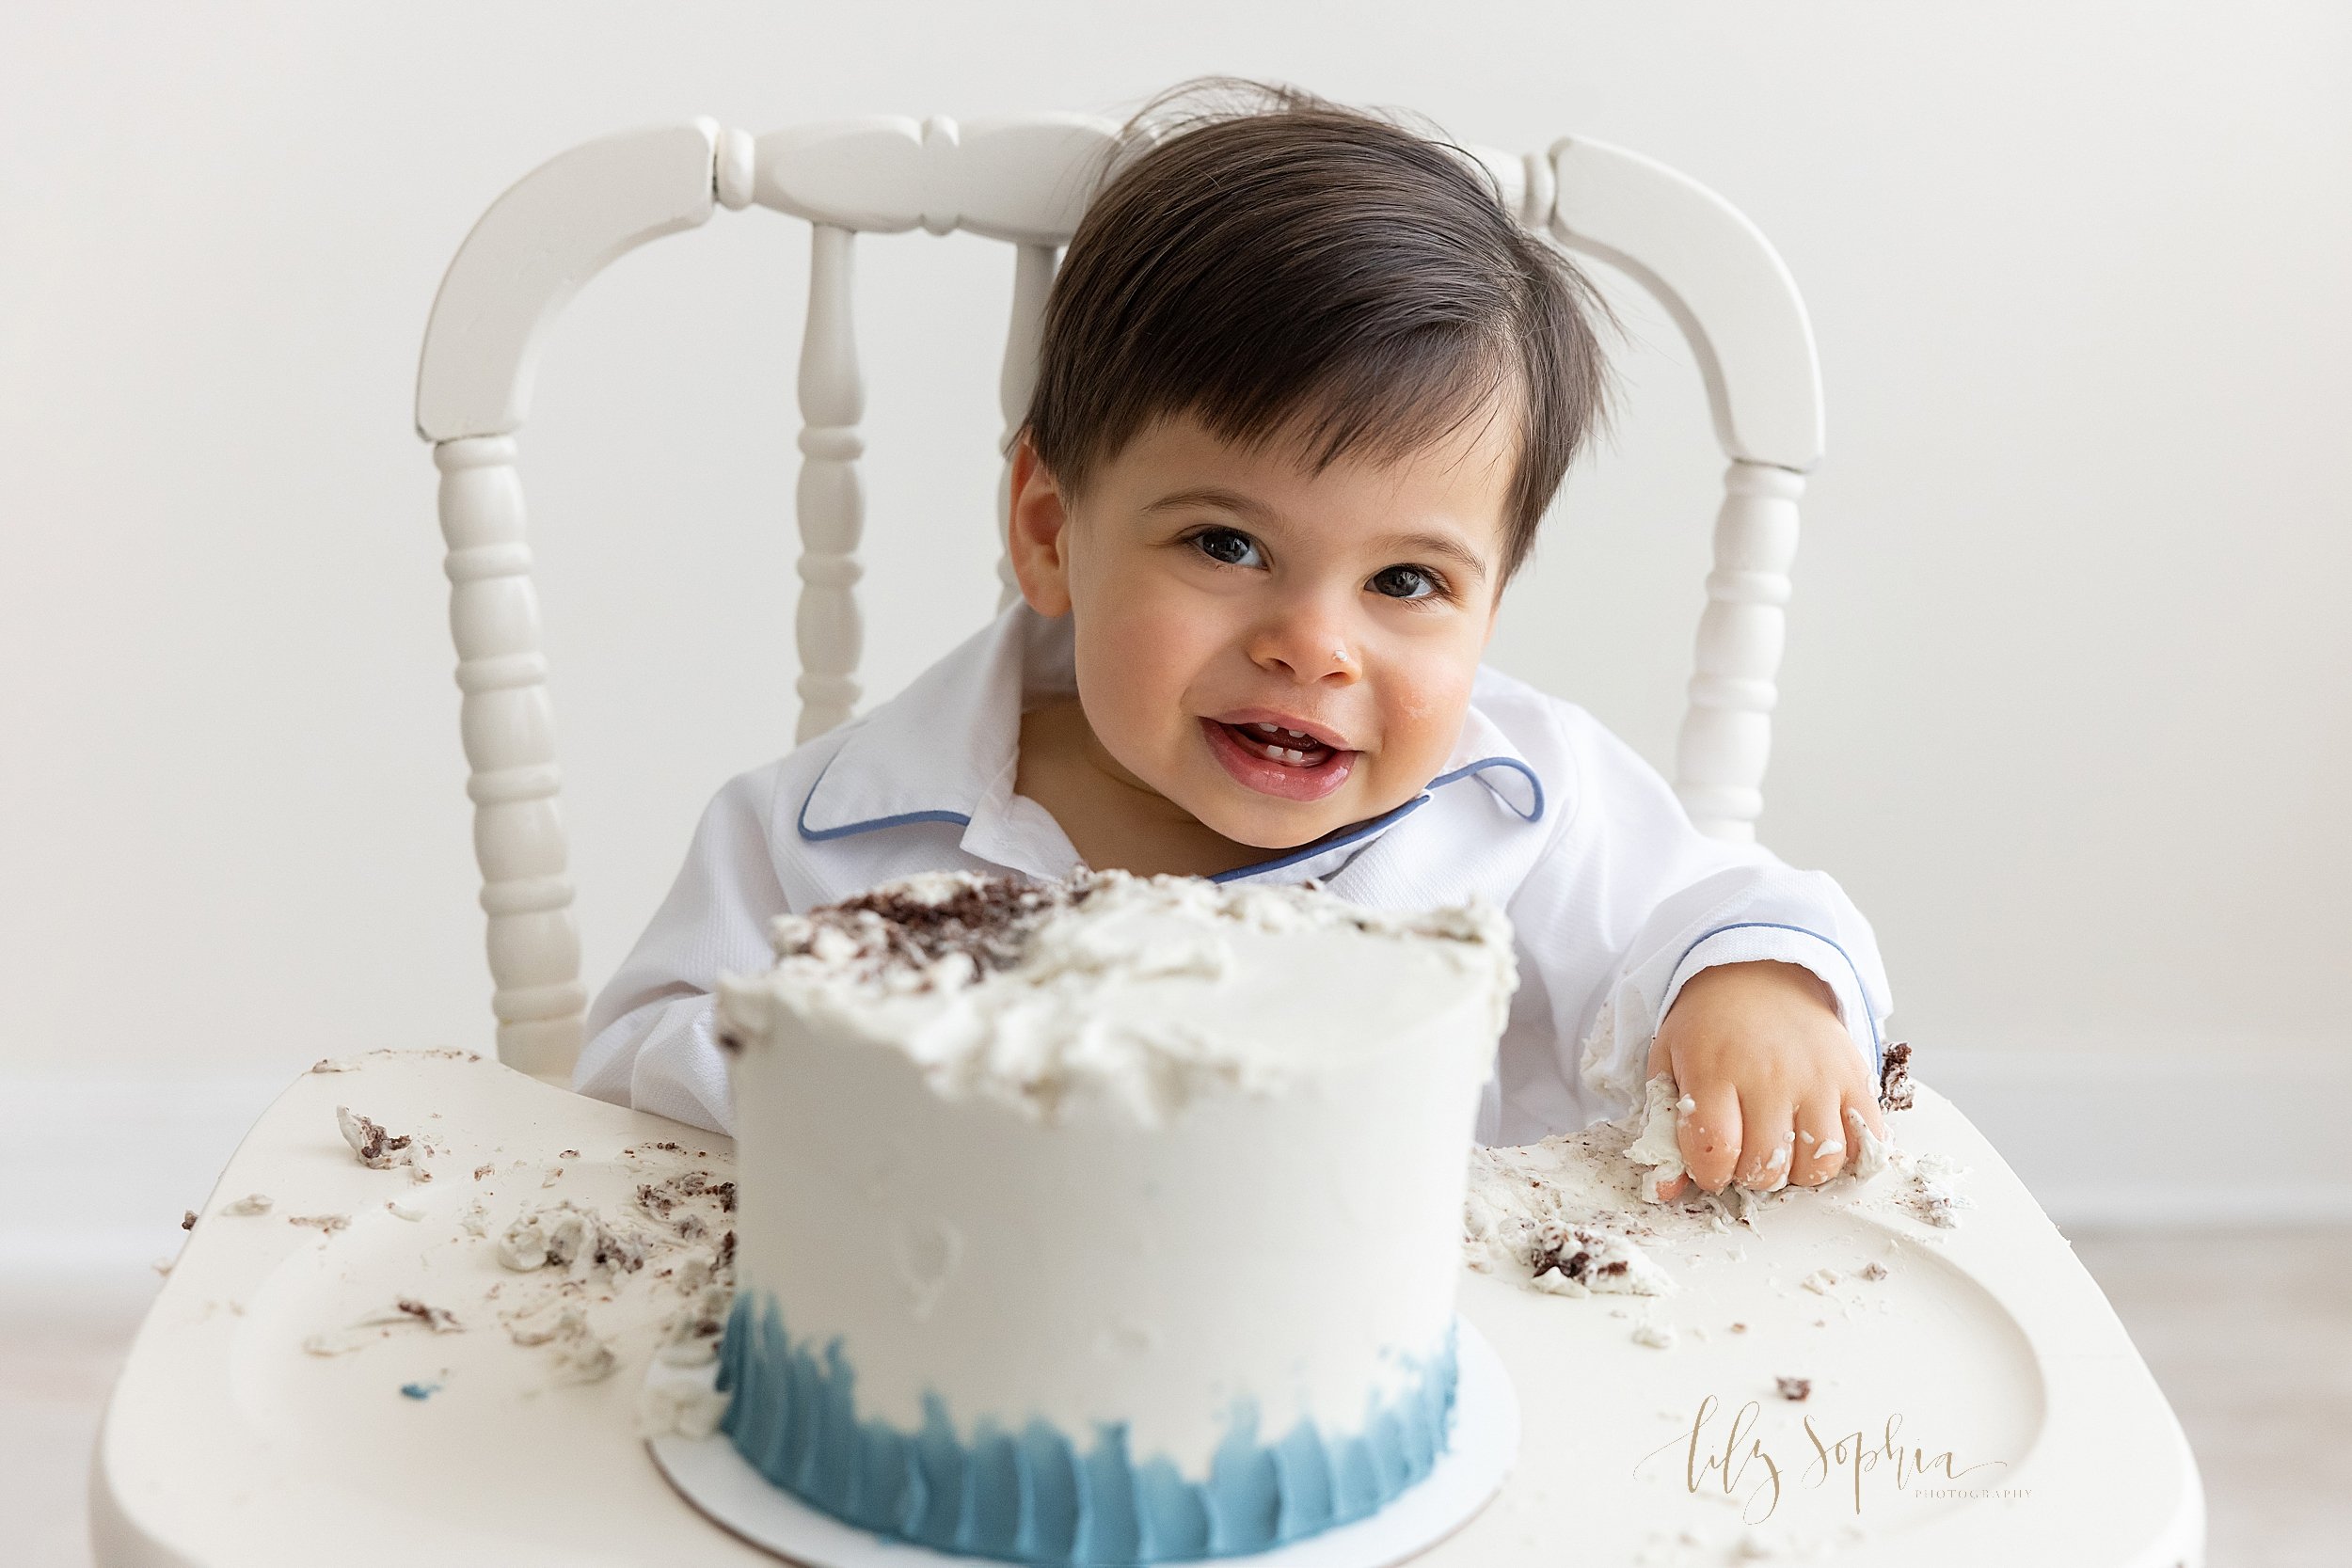 intown-atlanta-grant-park-decatur-oakhurst-chamblee-family-baby-boy-first-birthday-cake-smash-photoshoot_2577.jpg